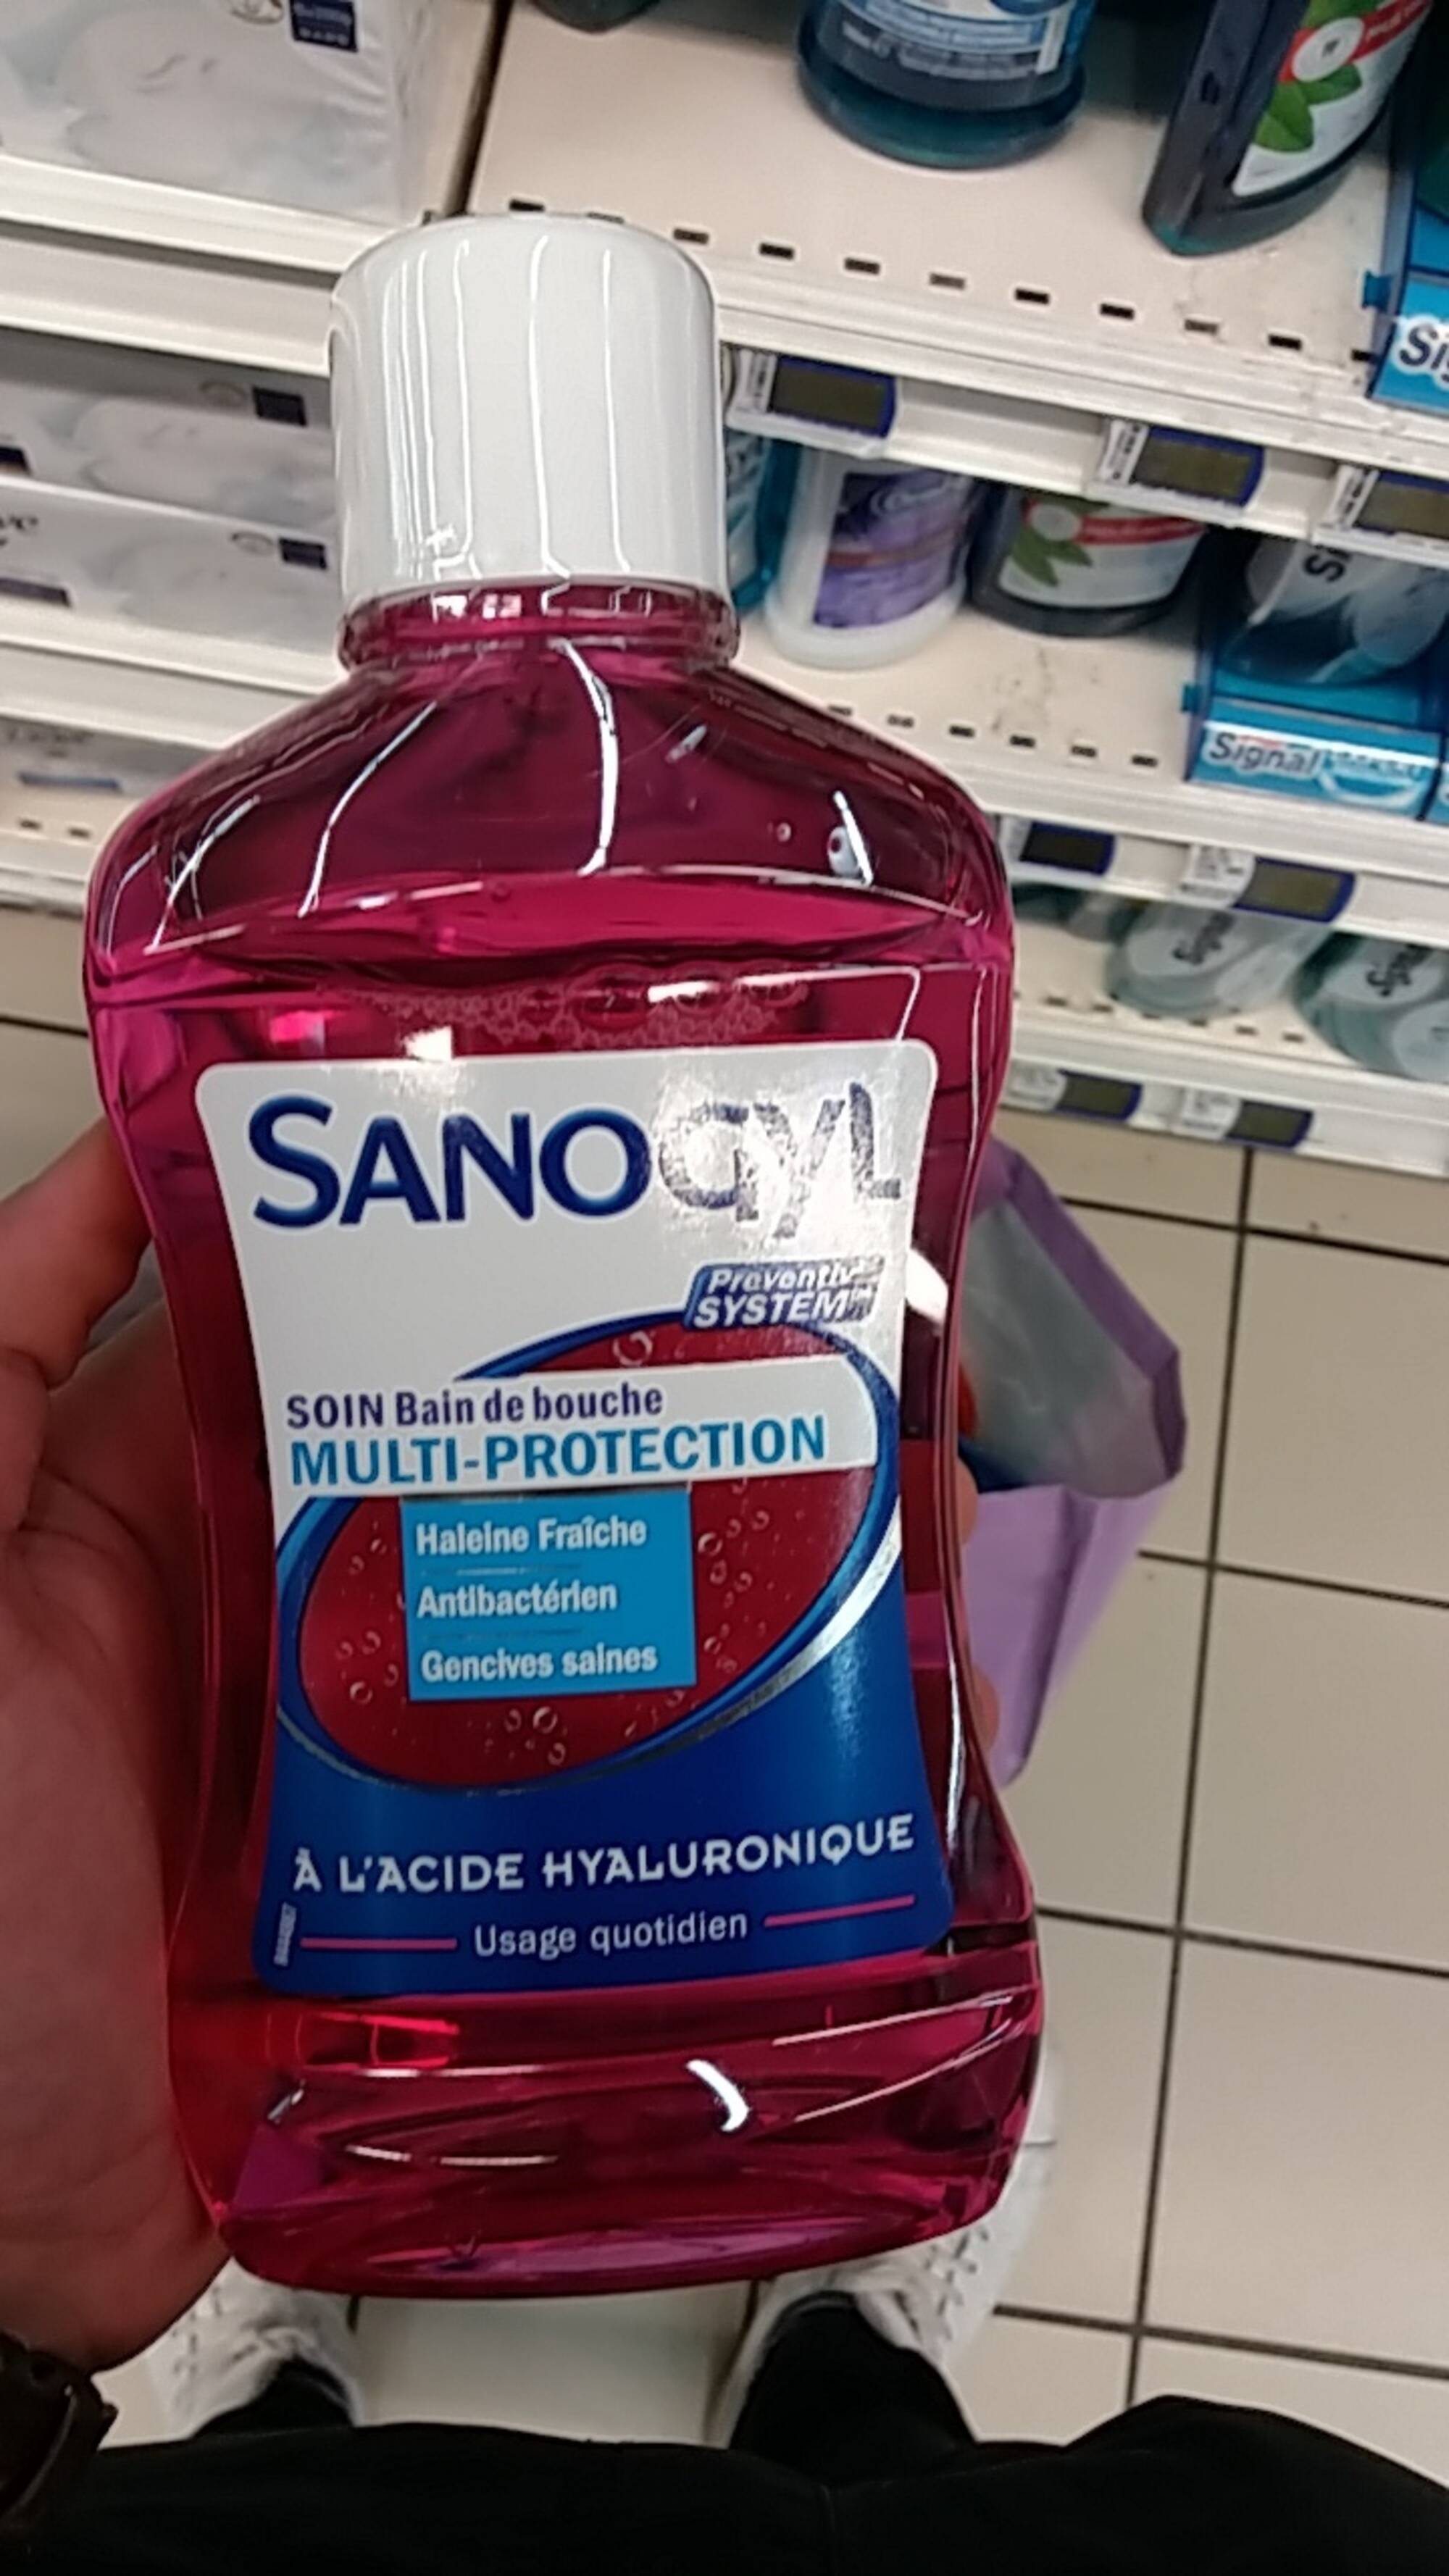 SANOGYL - Soin bain de bouche multi-protection